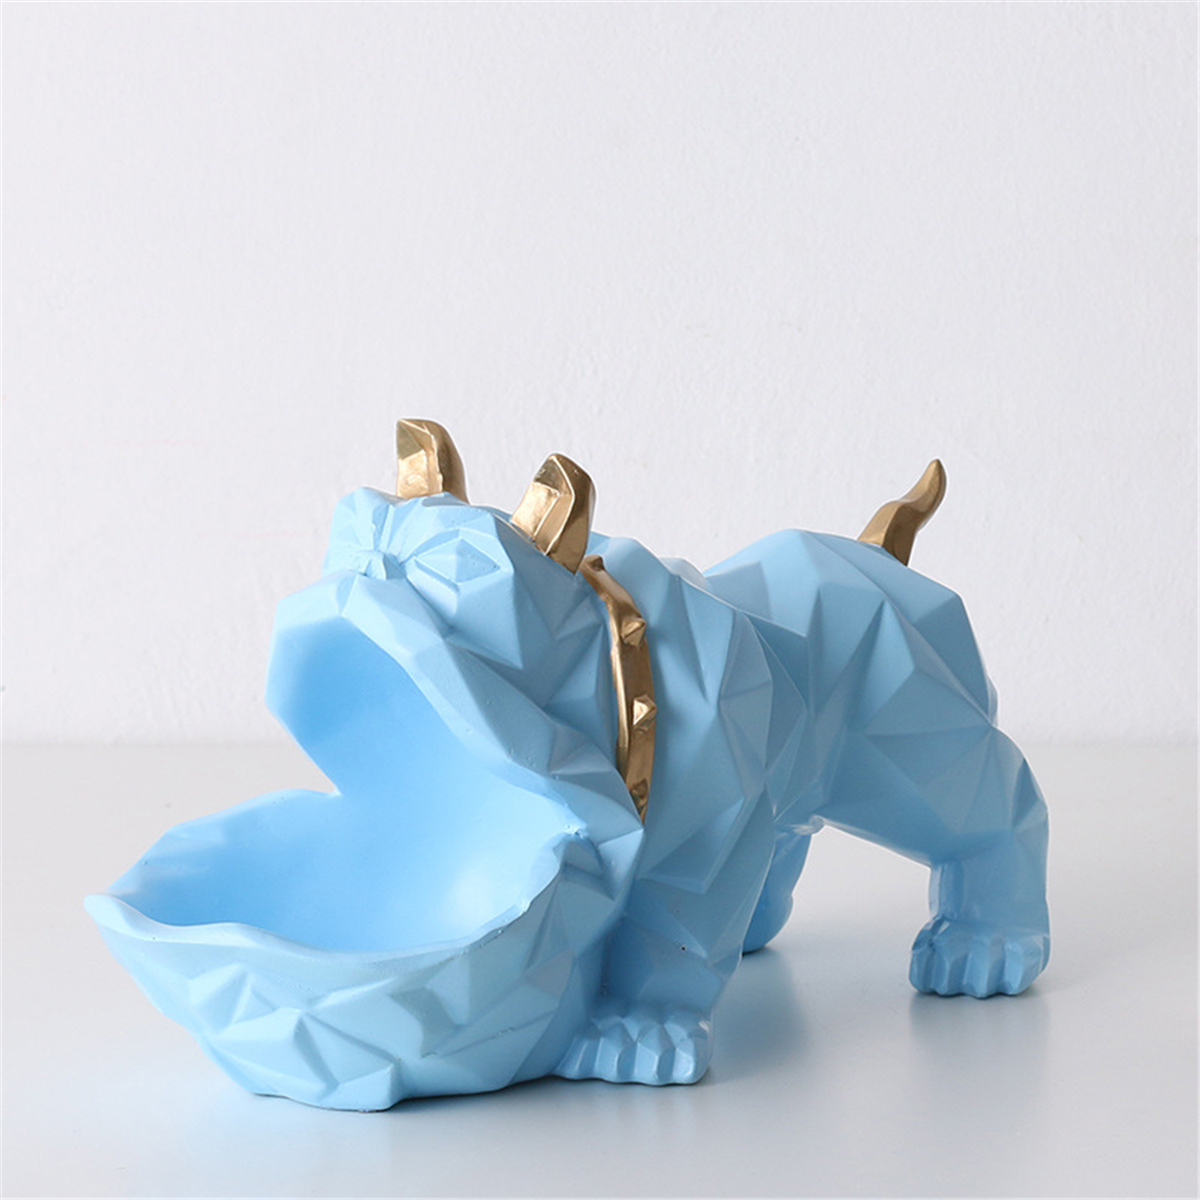 Bulldog-Animal-Sculpture-Puppy-Dog-Statue-Figure-Ornament-Gift-Decorations-1464229-1